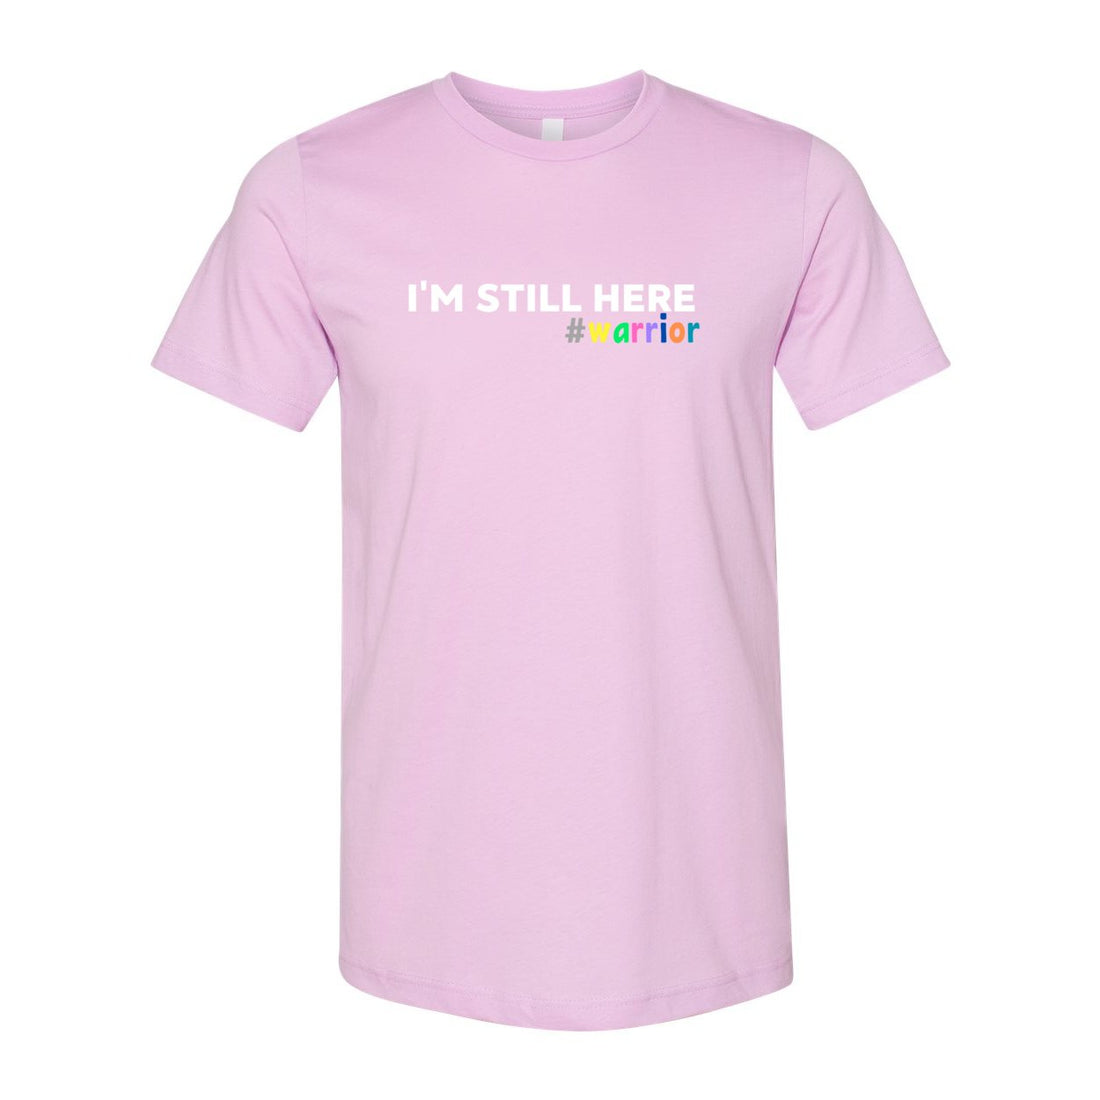 I'm Still Here - T-Shirts - Positively Sassy - I'm Still Here